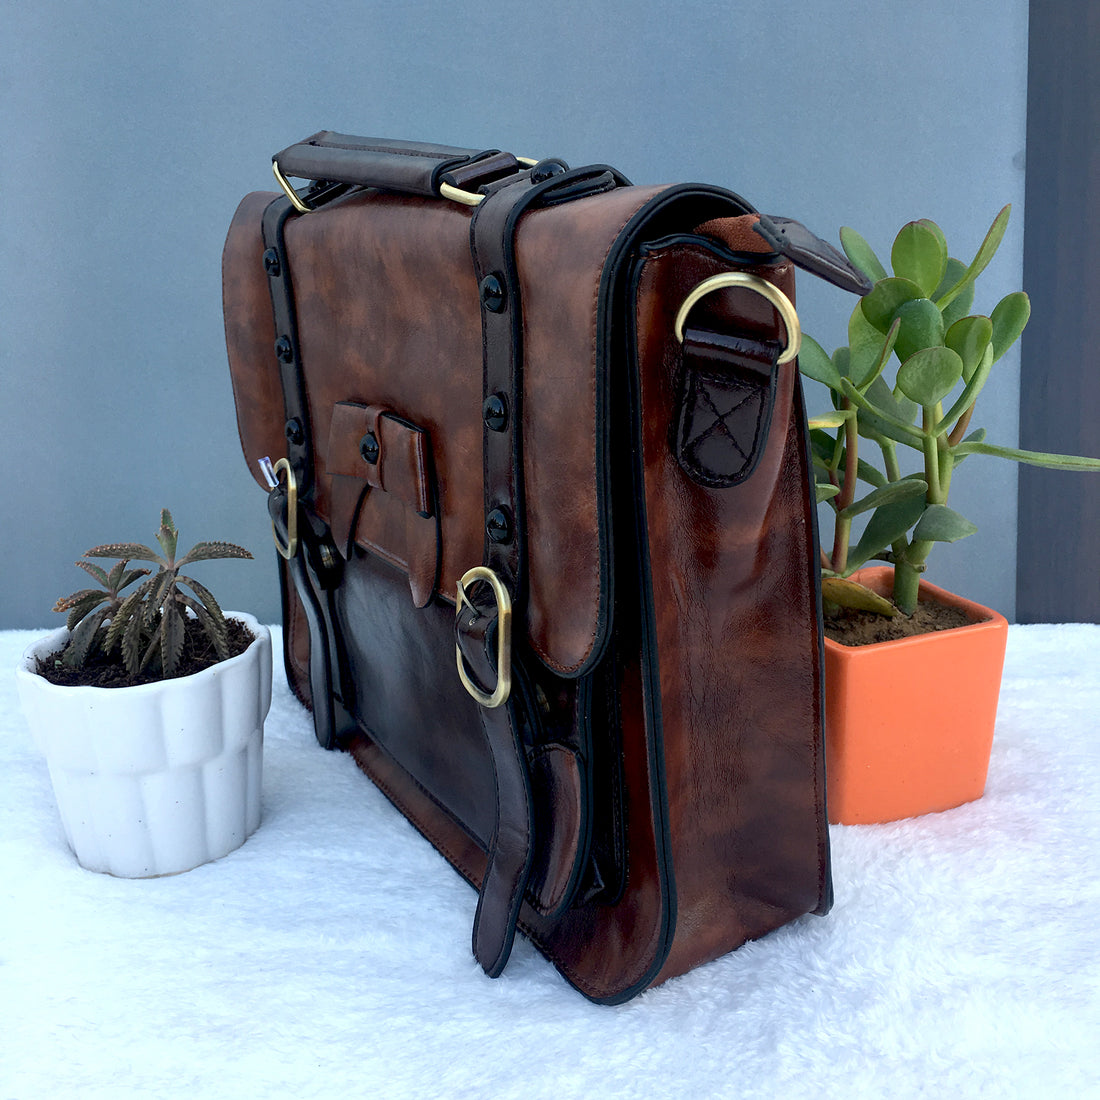 Ficuster Tan Leather Handbag